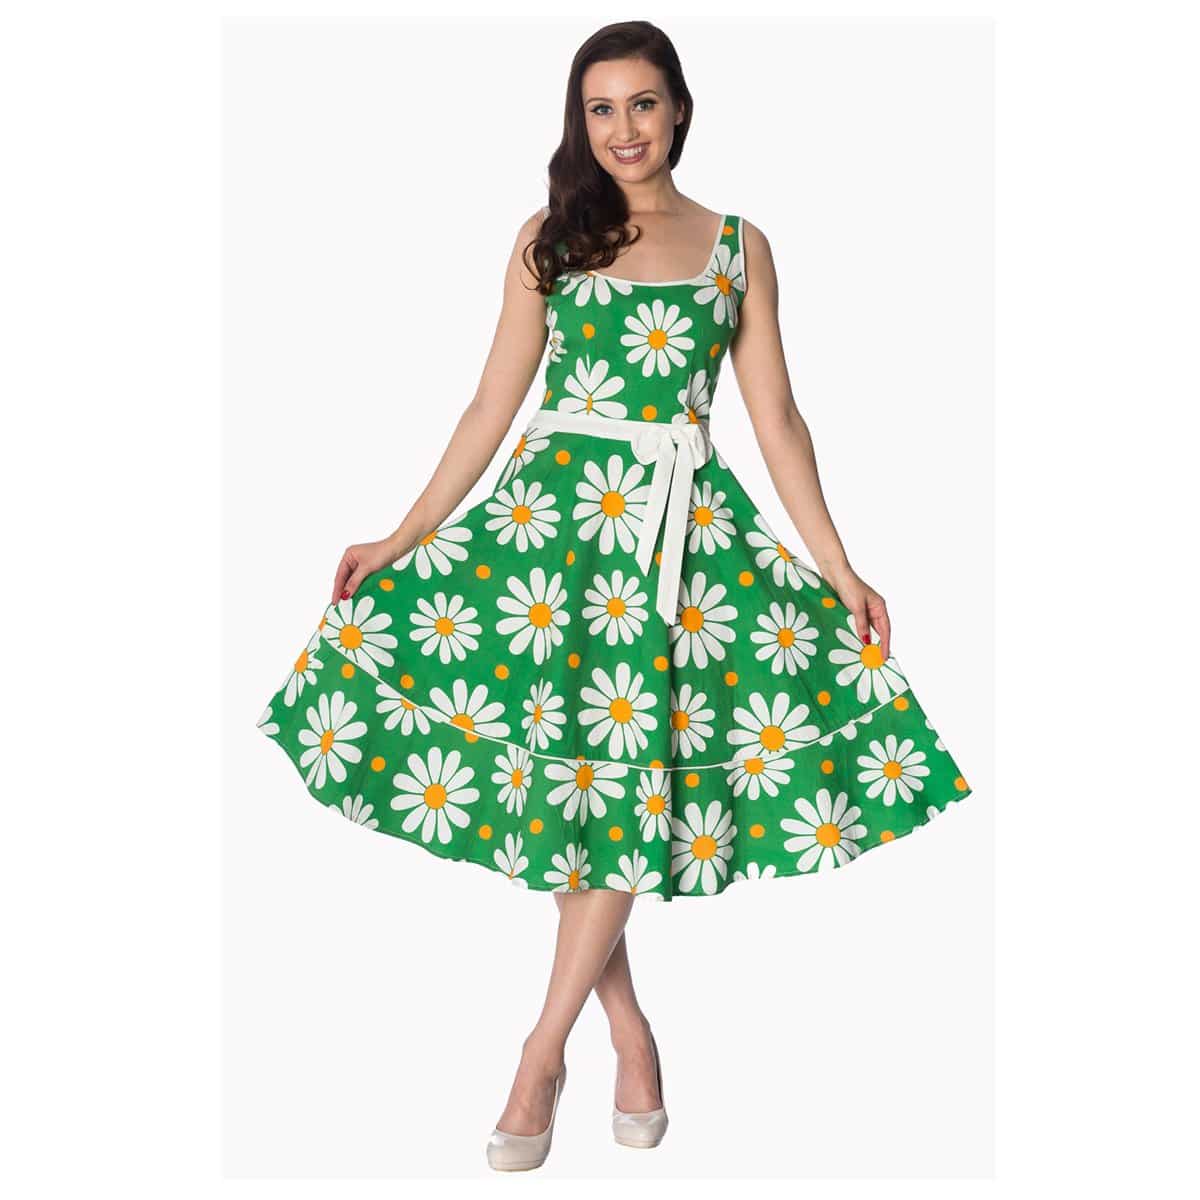 Daisy sommerkjole | 70 talls kjole | RiffRaff.no